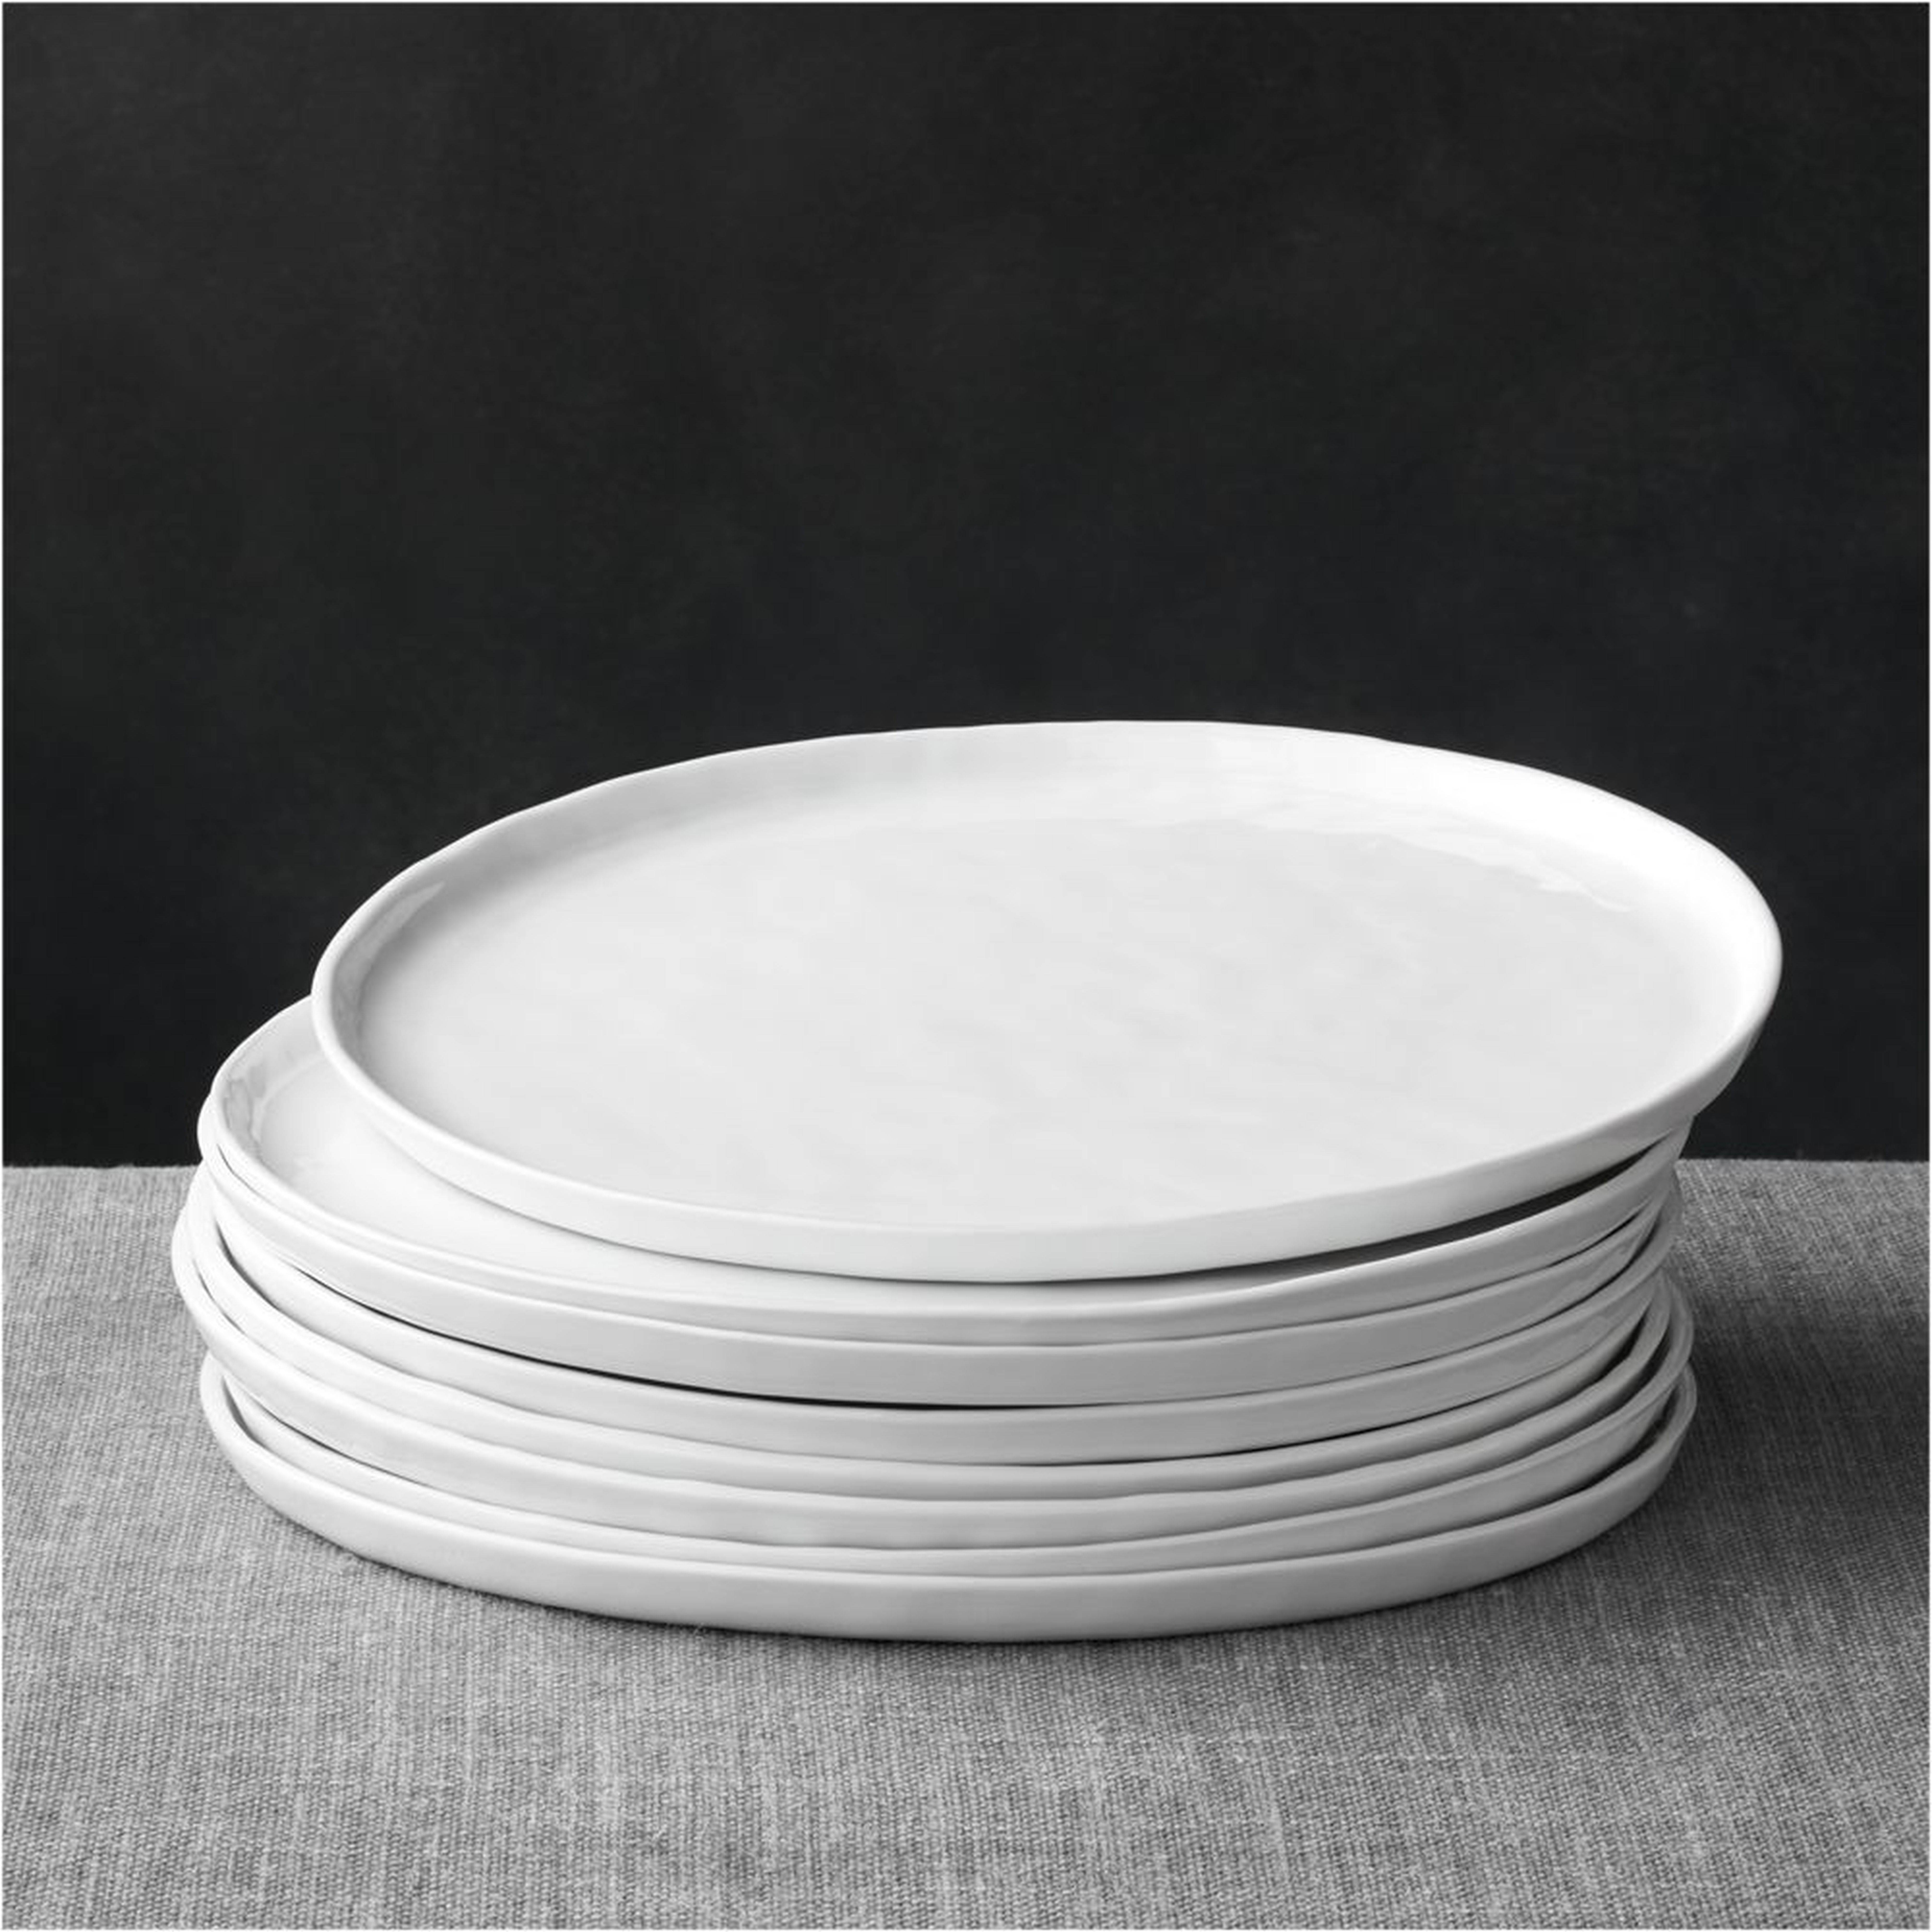 Set of 8 Mercer Dinner Plates - Crate and Barrel